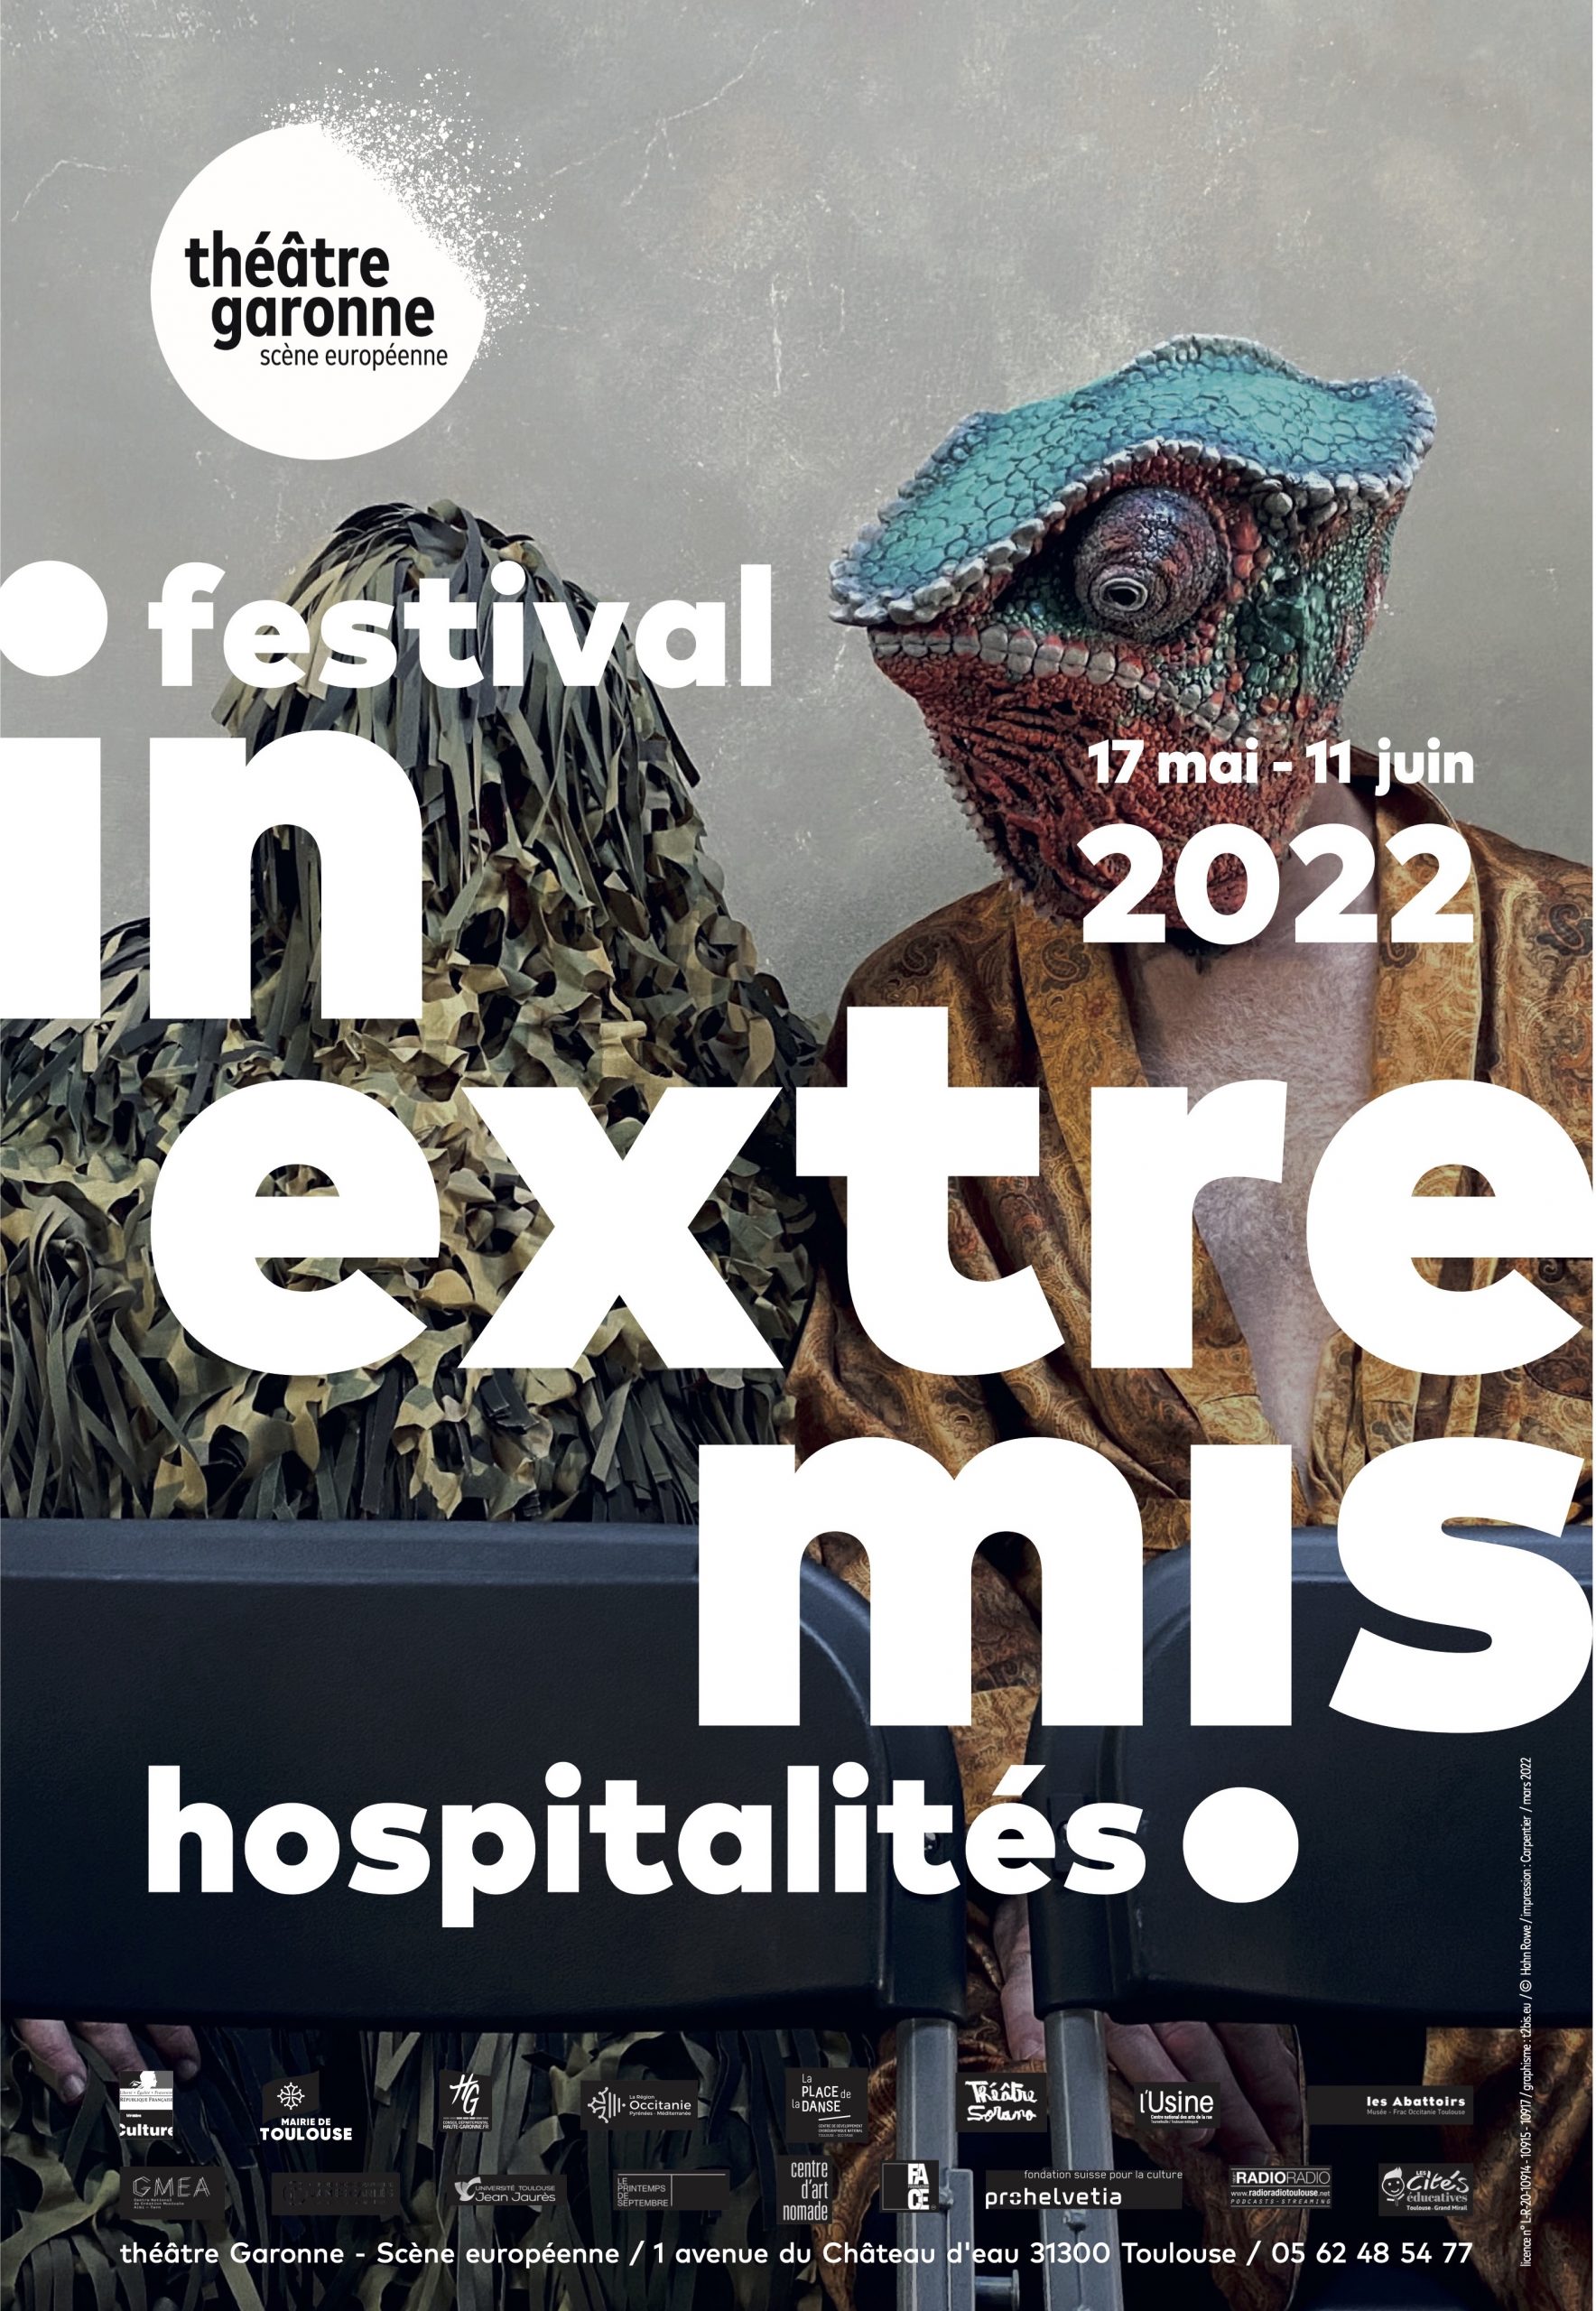 Festival IN Extremis Theatre Garonne